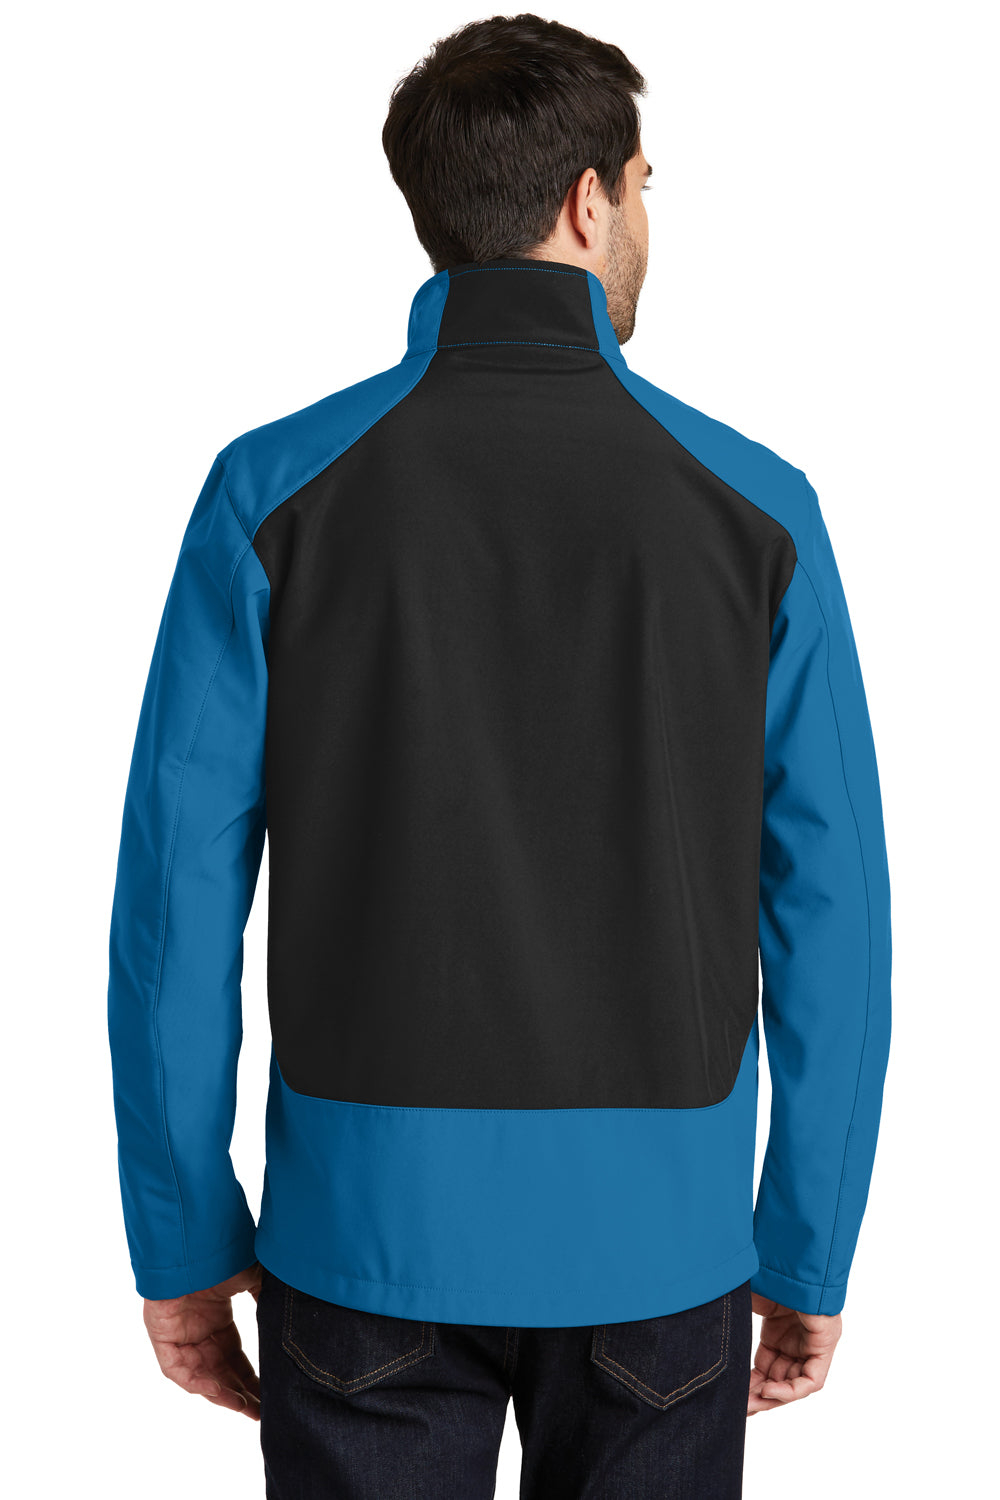 Port Authority J336 Mens Wind & Water Resistant Full Zip Jacket Imperial Blue/Black Back